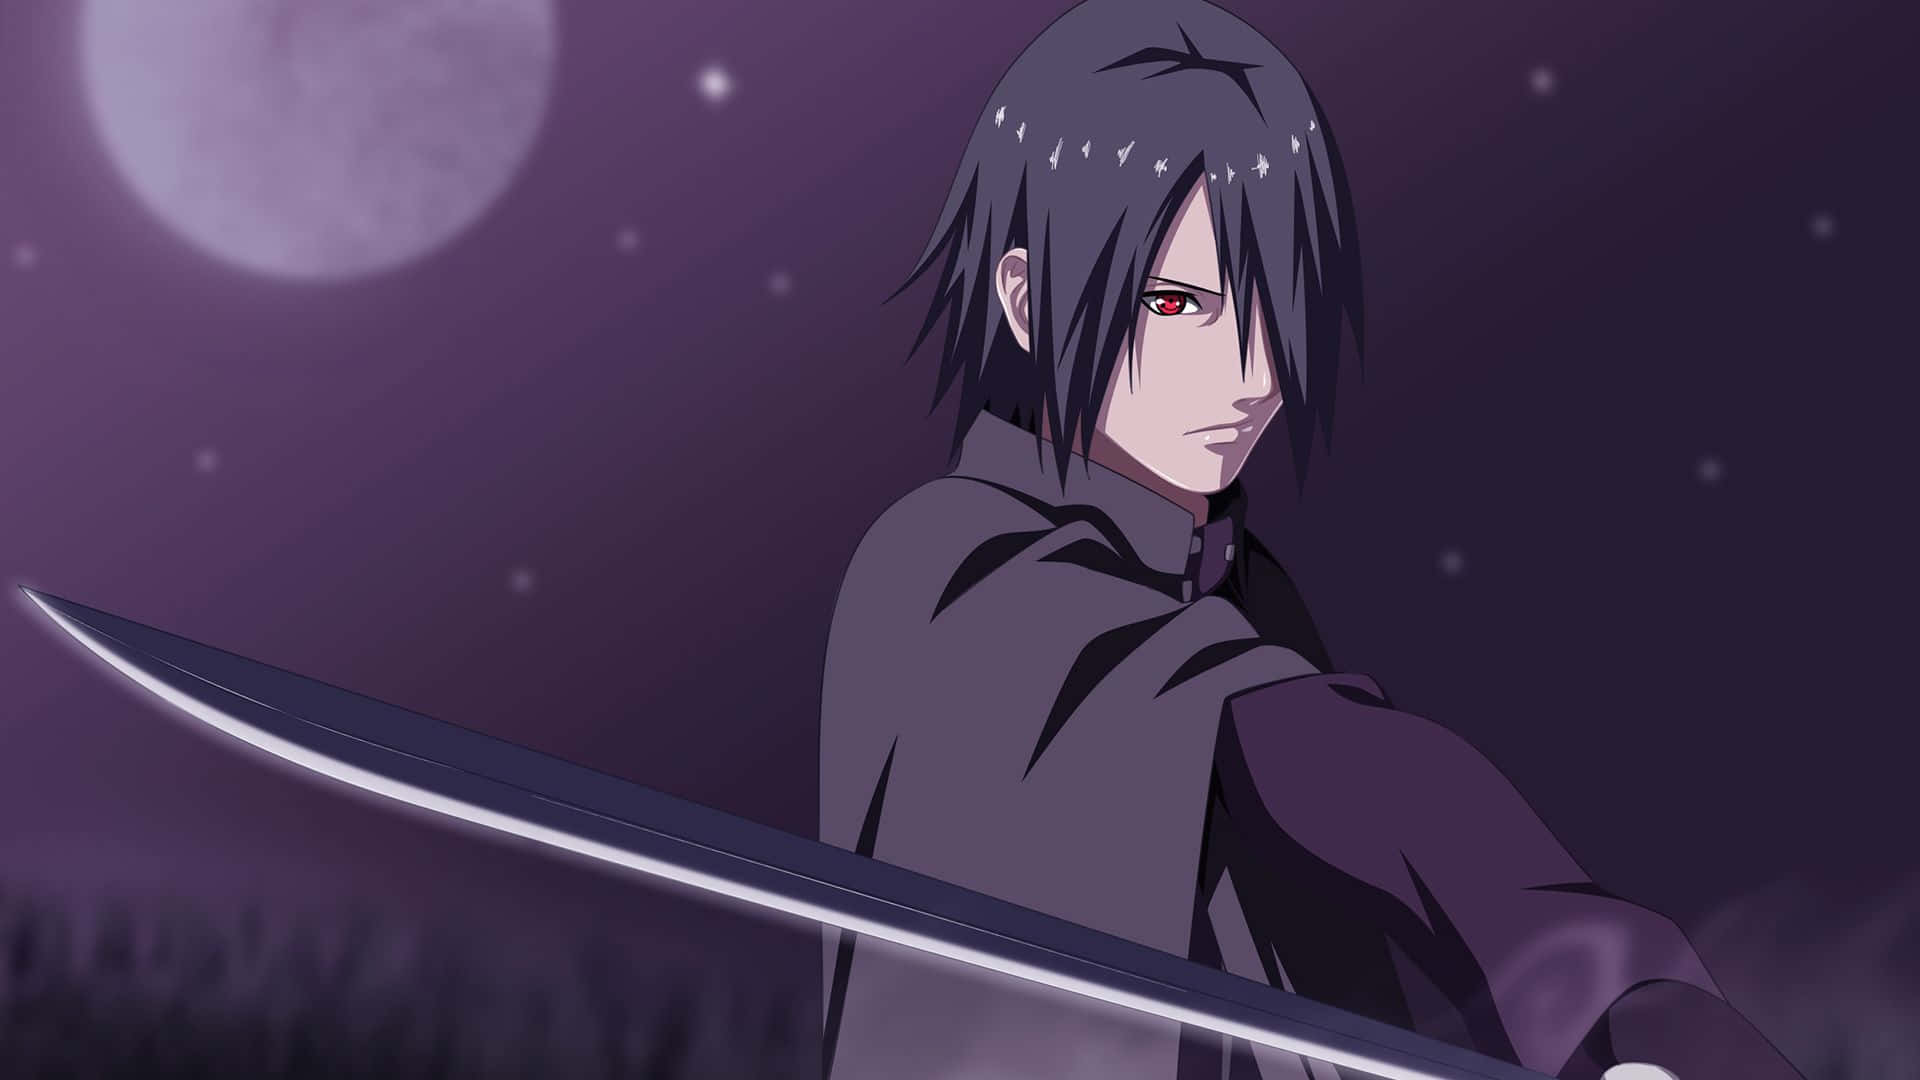 Sasuke Uchiha, member of the Uchiha clan and one of the strongest characters in the anime series "Naruto" Wallpaper